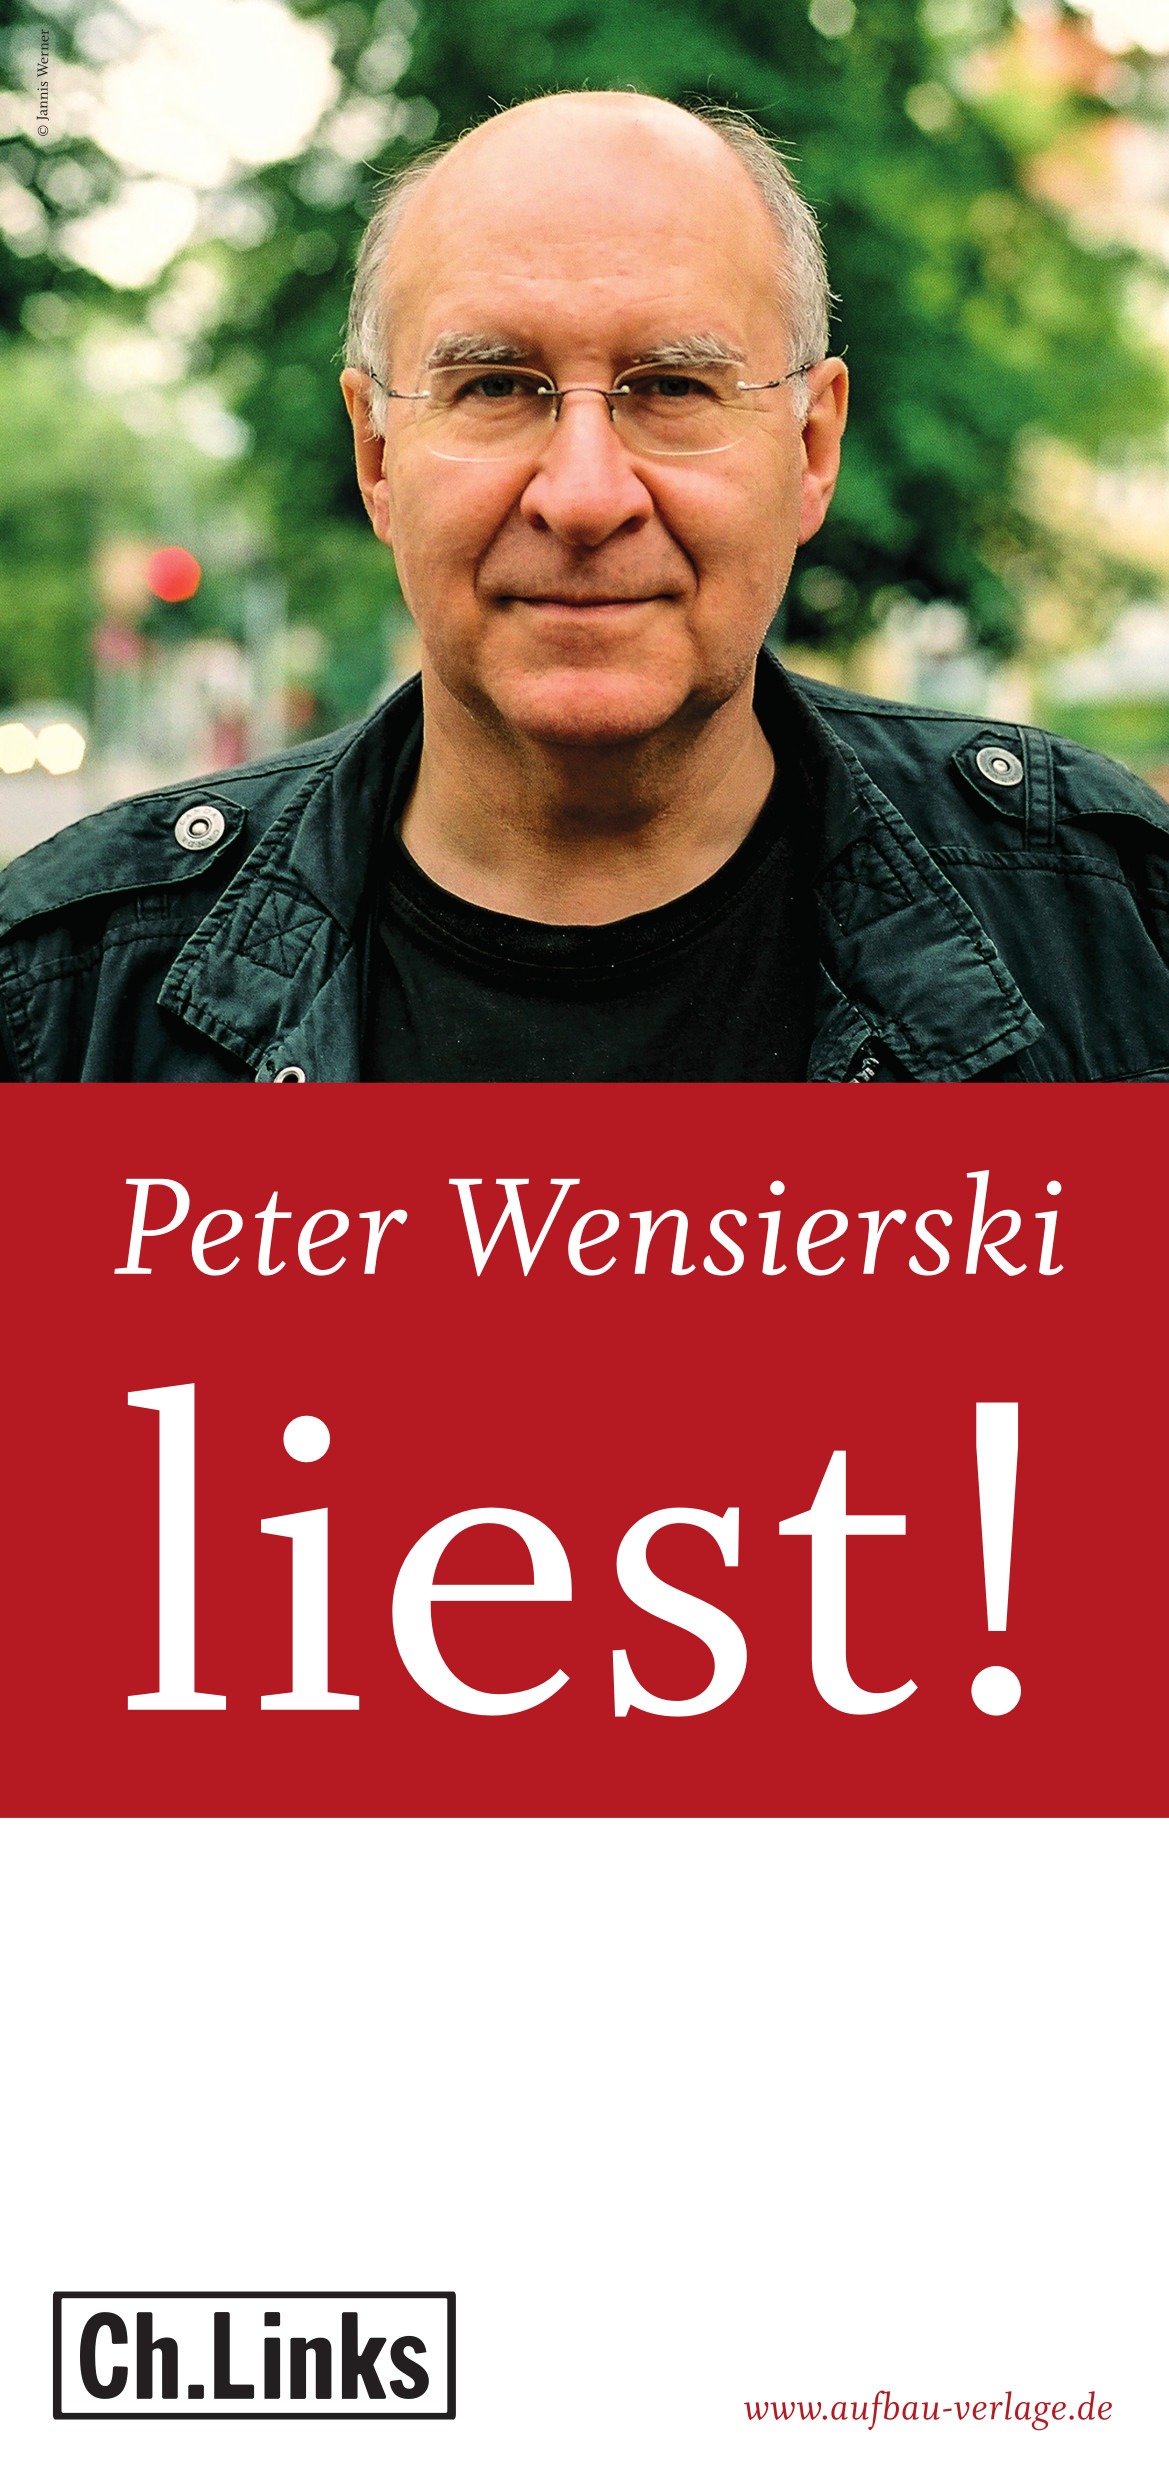 Peter Wensierski Domaschk